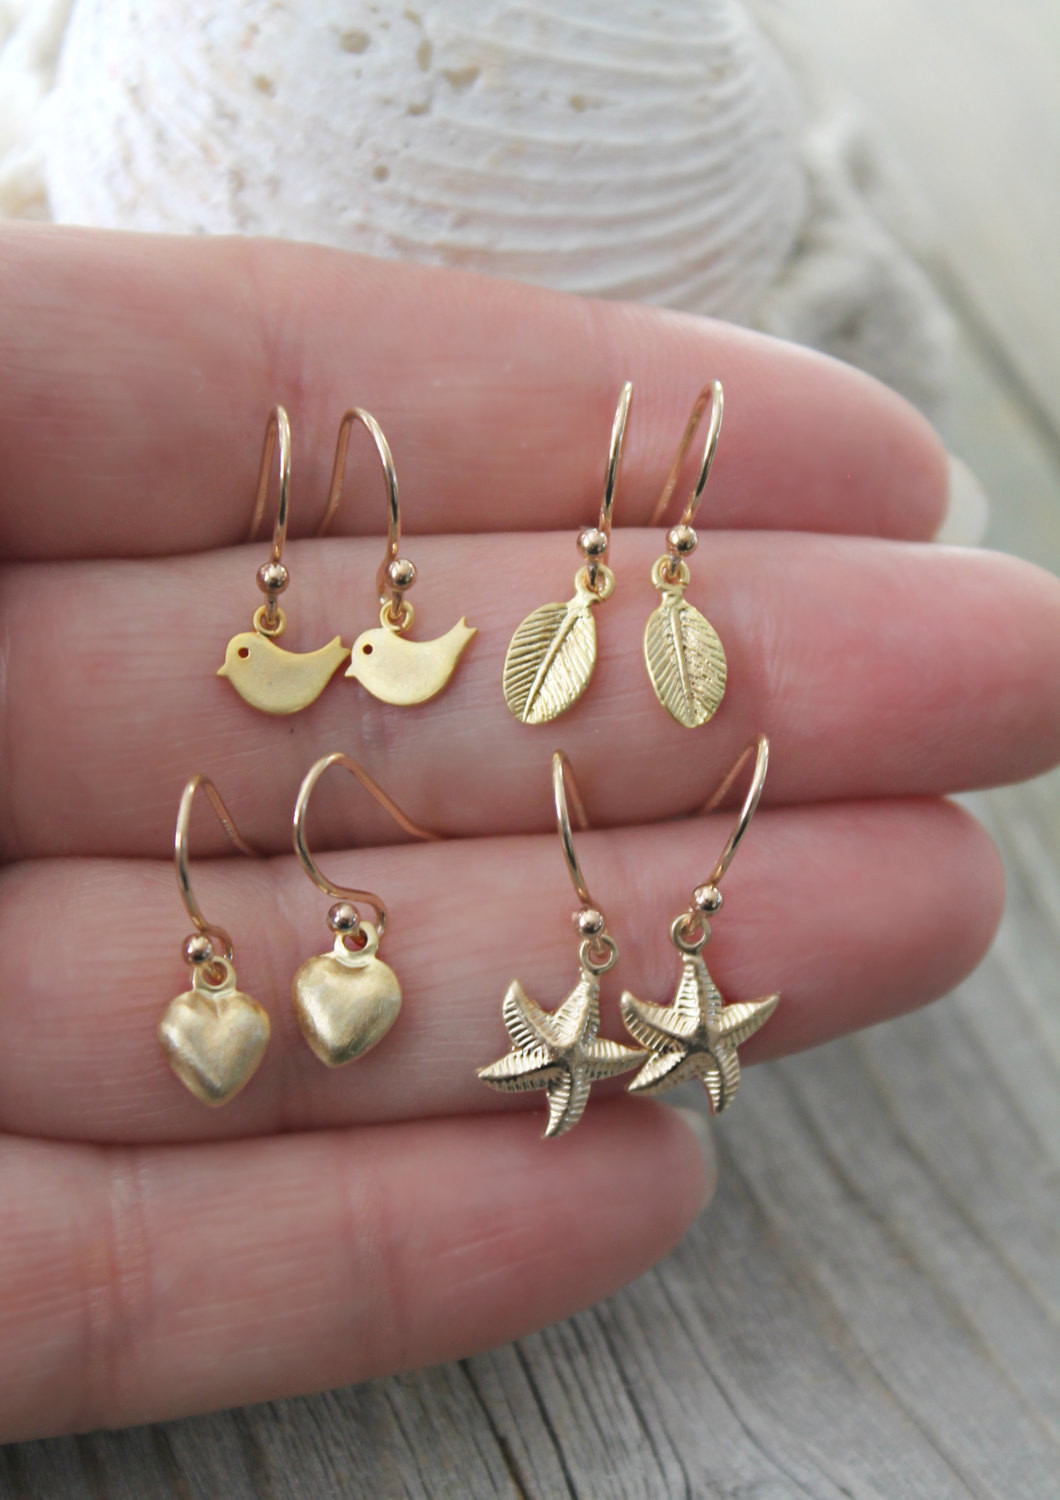 Little Girls Earrings Elegant Little Girl Earrings 14k Gold Filled Dangle Child By Of Little Girls Earrings 